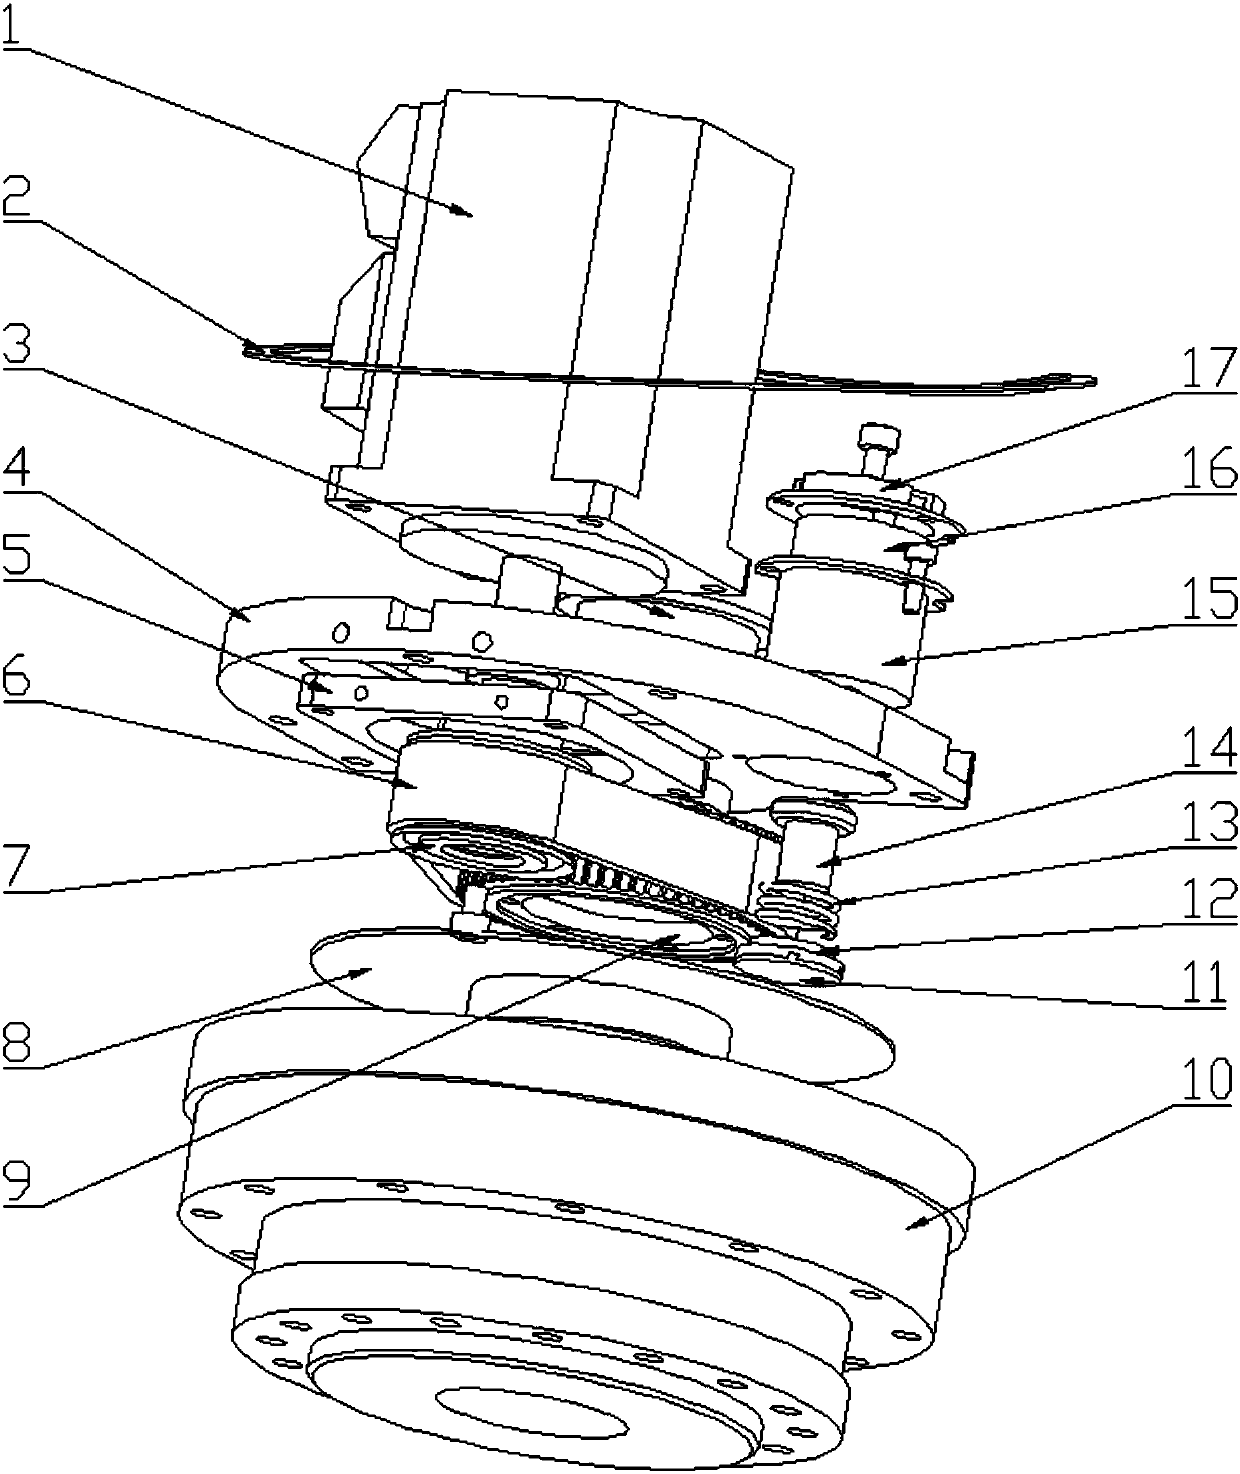 Multi-freedom-degree hollow coordinative mechanical arm